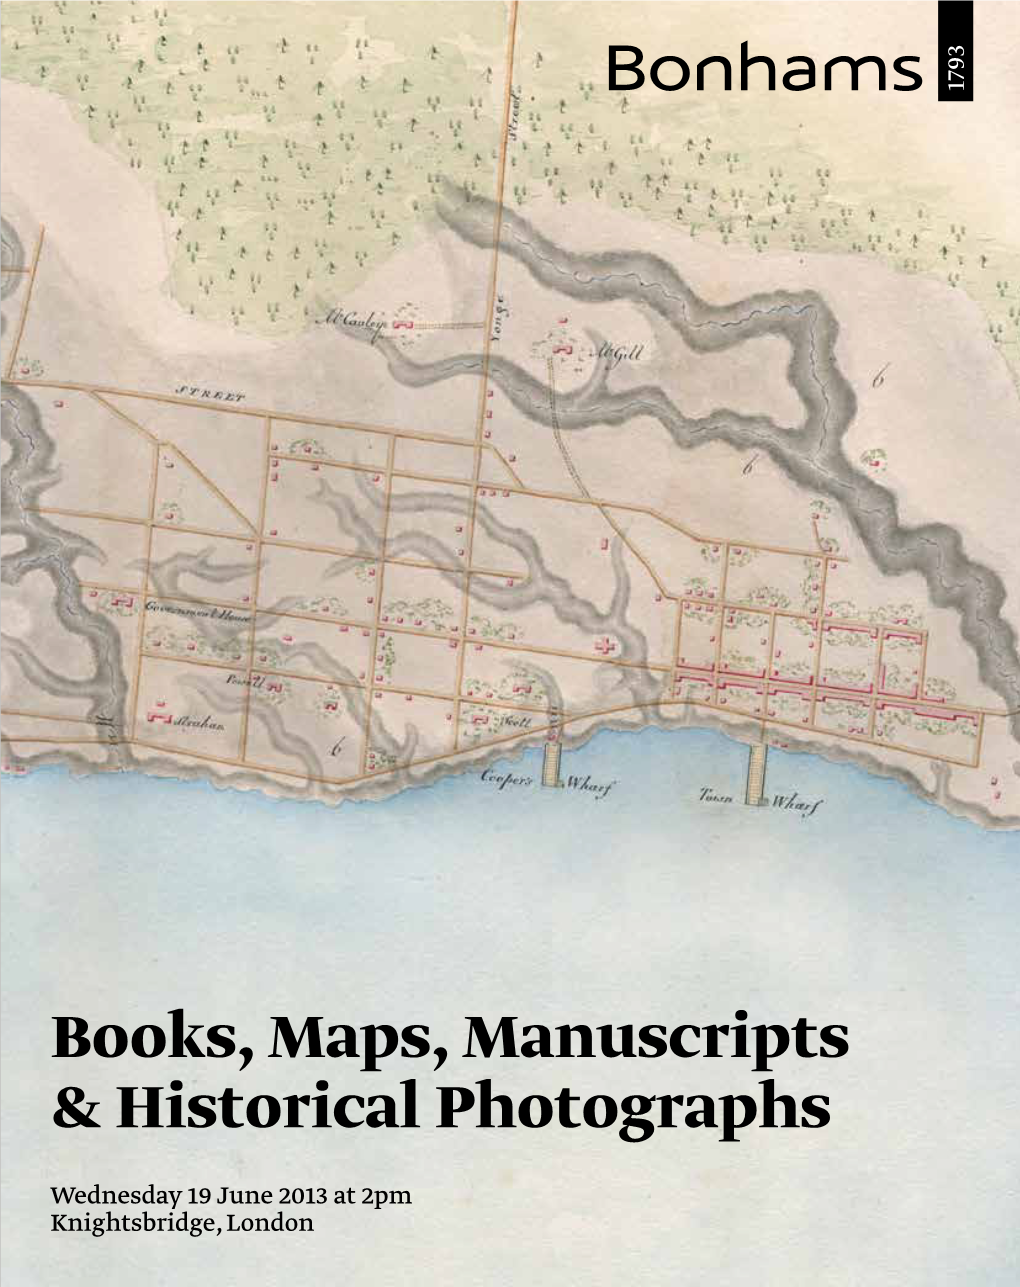 Books, Maps, Manuscripts & Historical Photographs